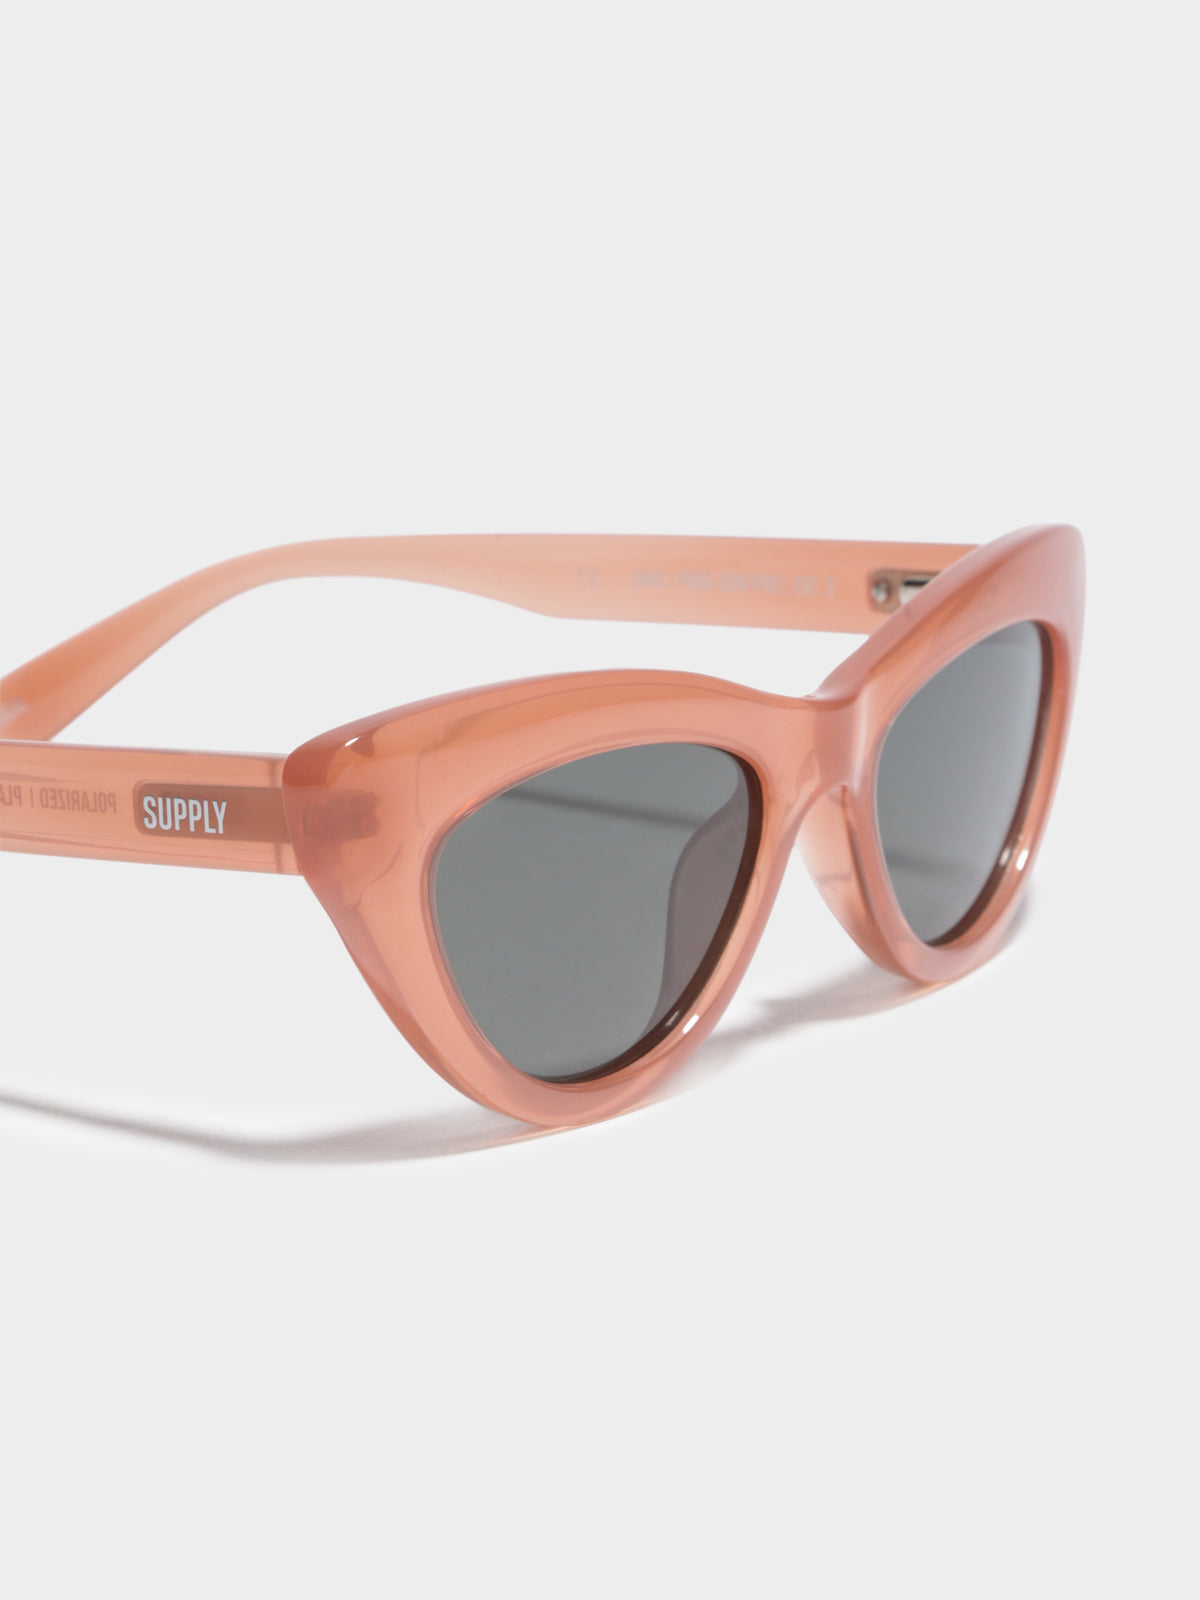 AMS Polarised Cateye Sunglasses in Polished Coral &amp; Dark Grey